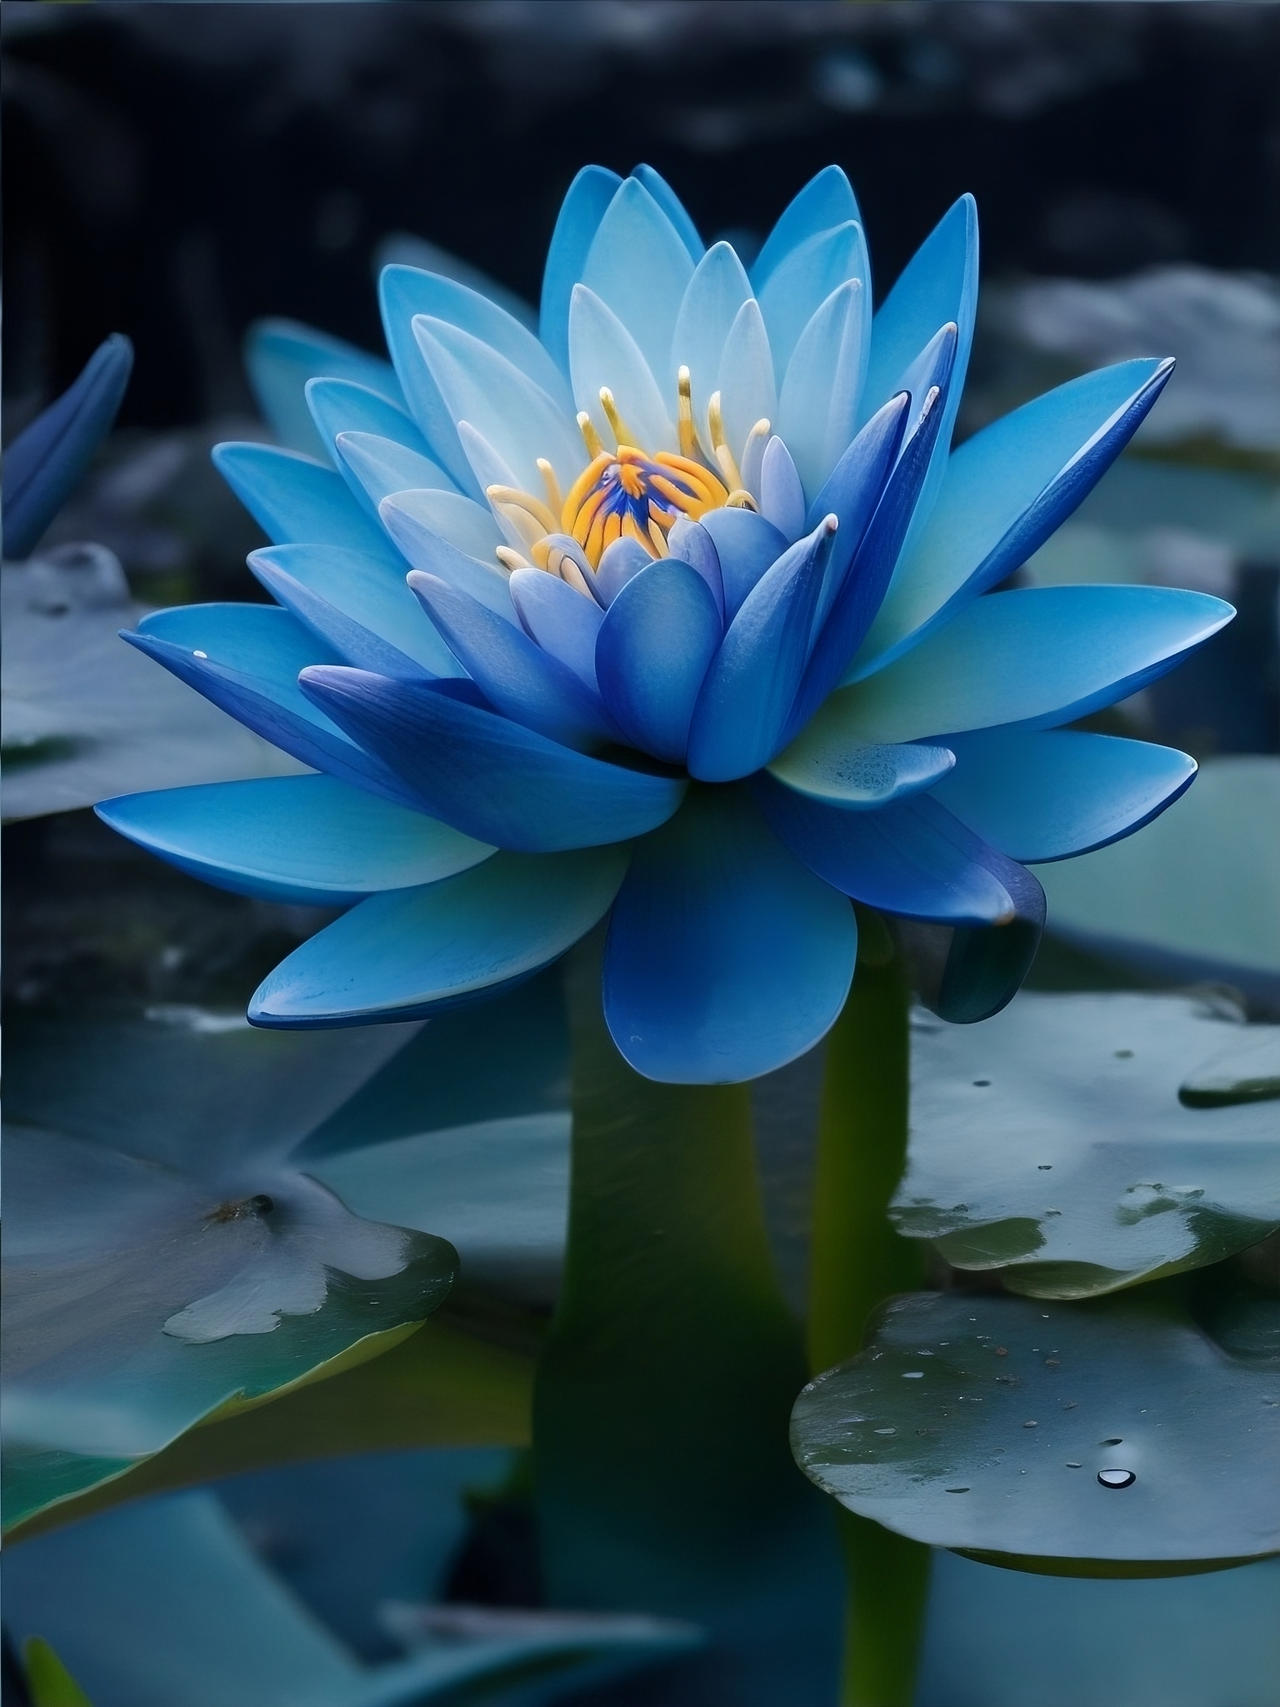 Lovely Blue Lotus Flower by R-ARTS01 on DeviantArt